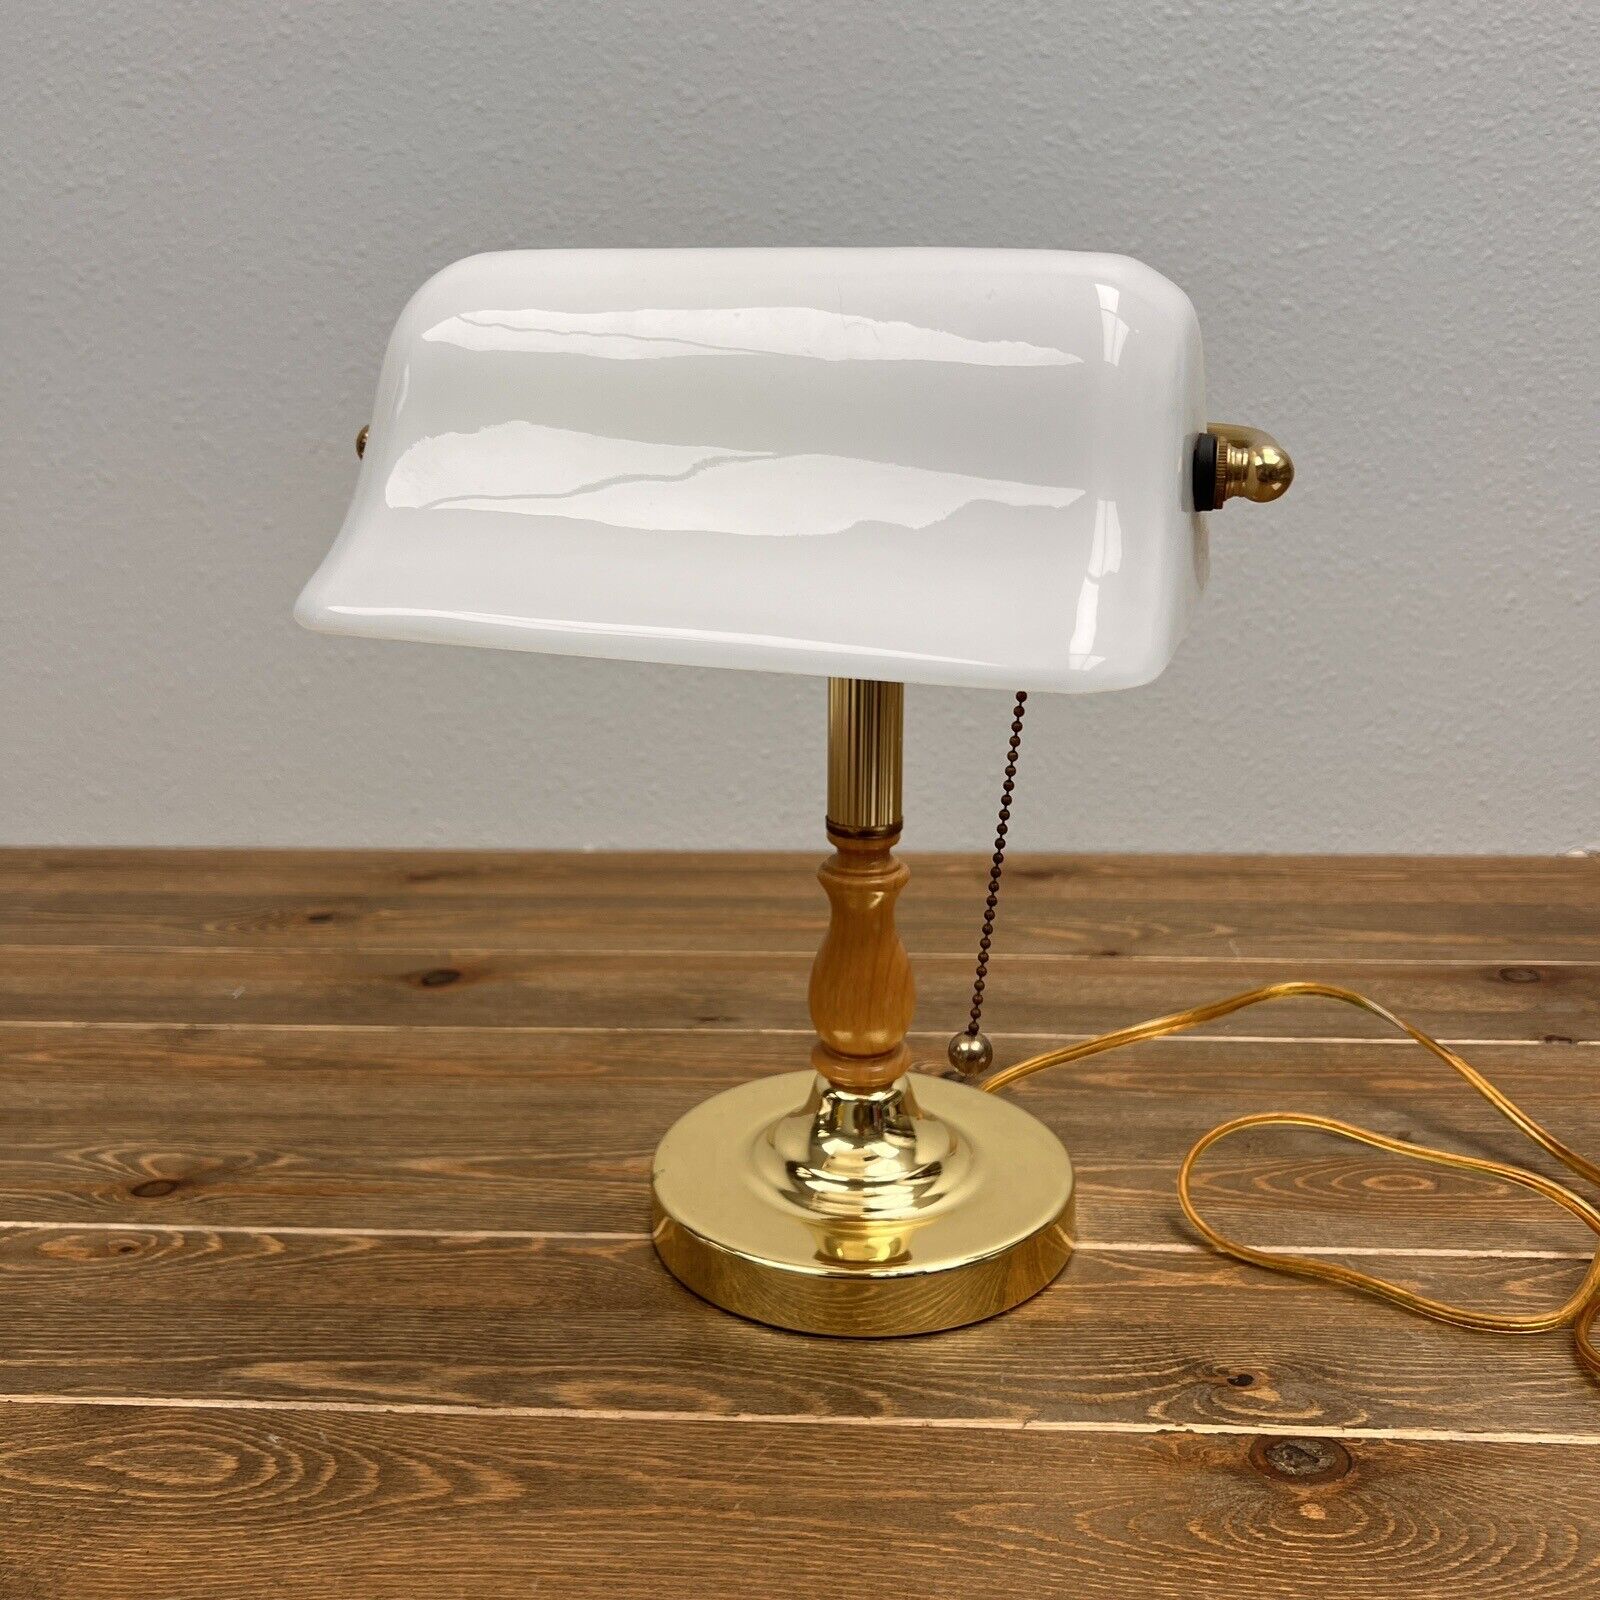 Vintage Bankers Lamp Light White Glass Shade Desk Lamp Pull Chain Works